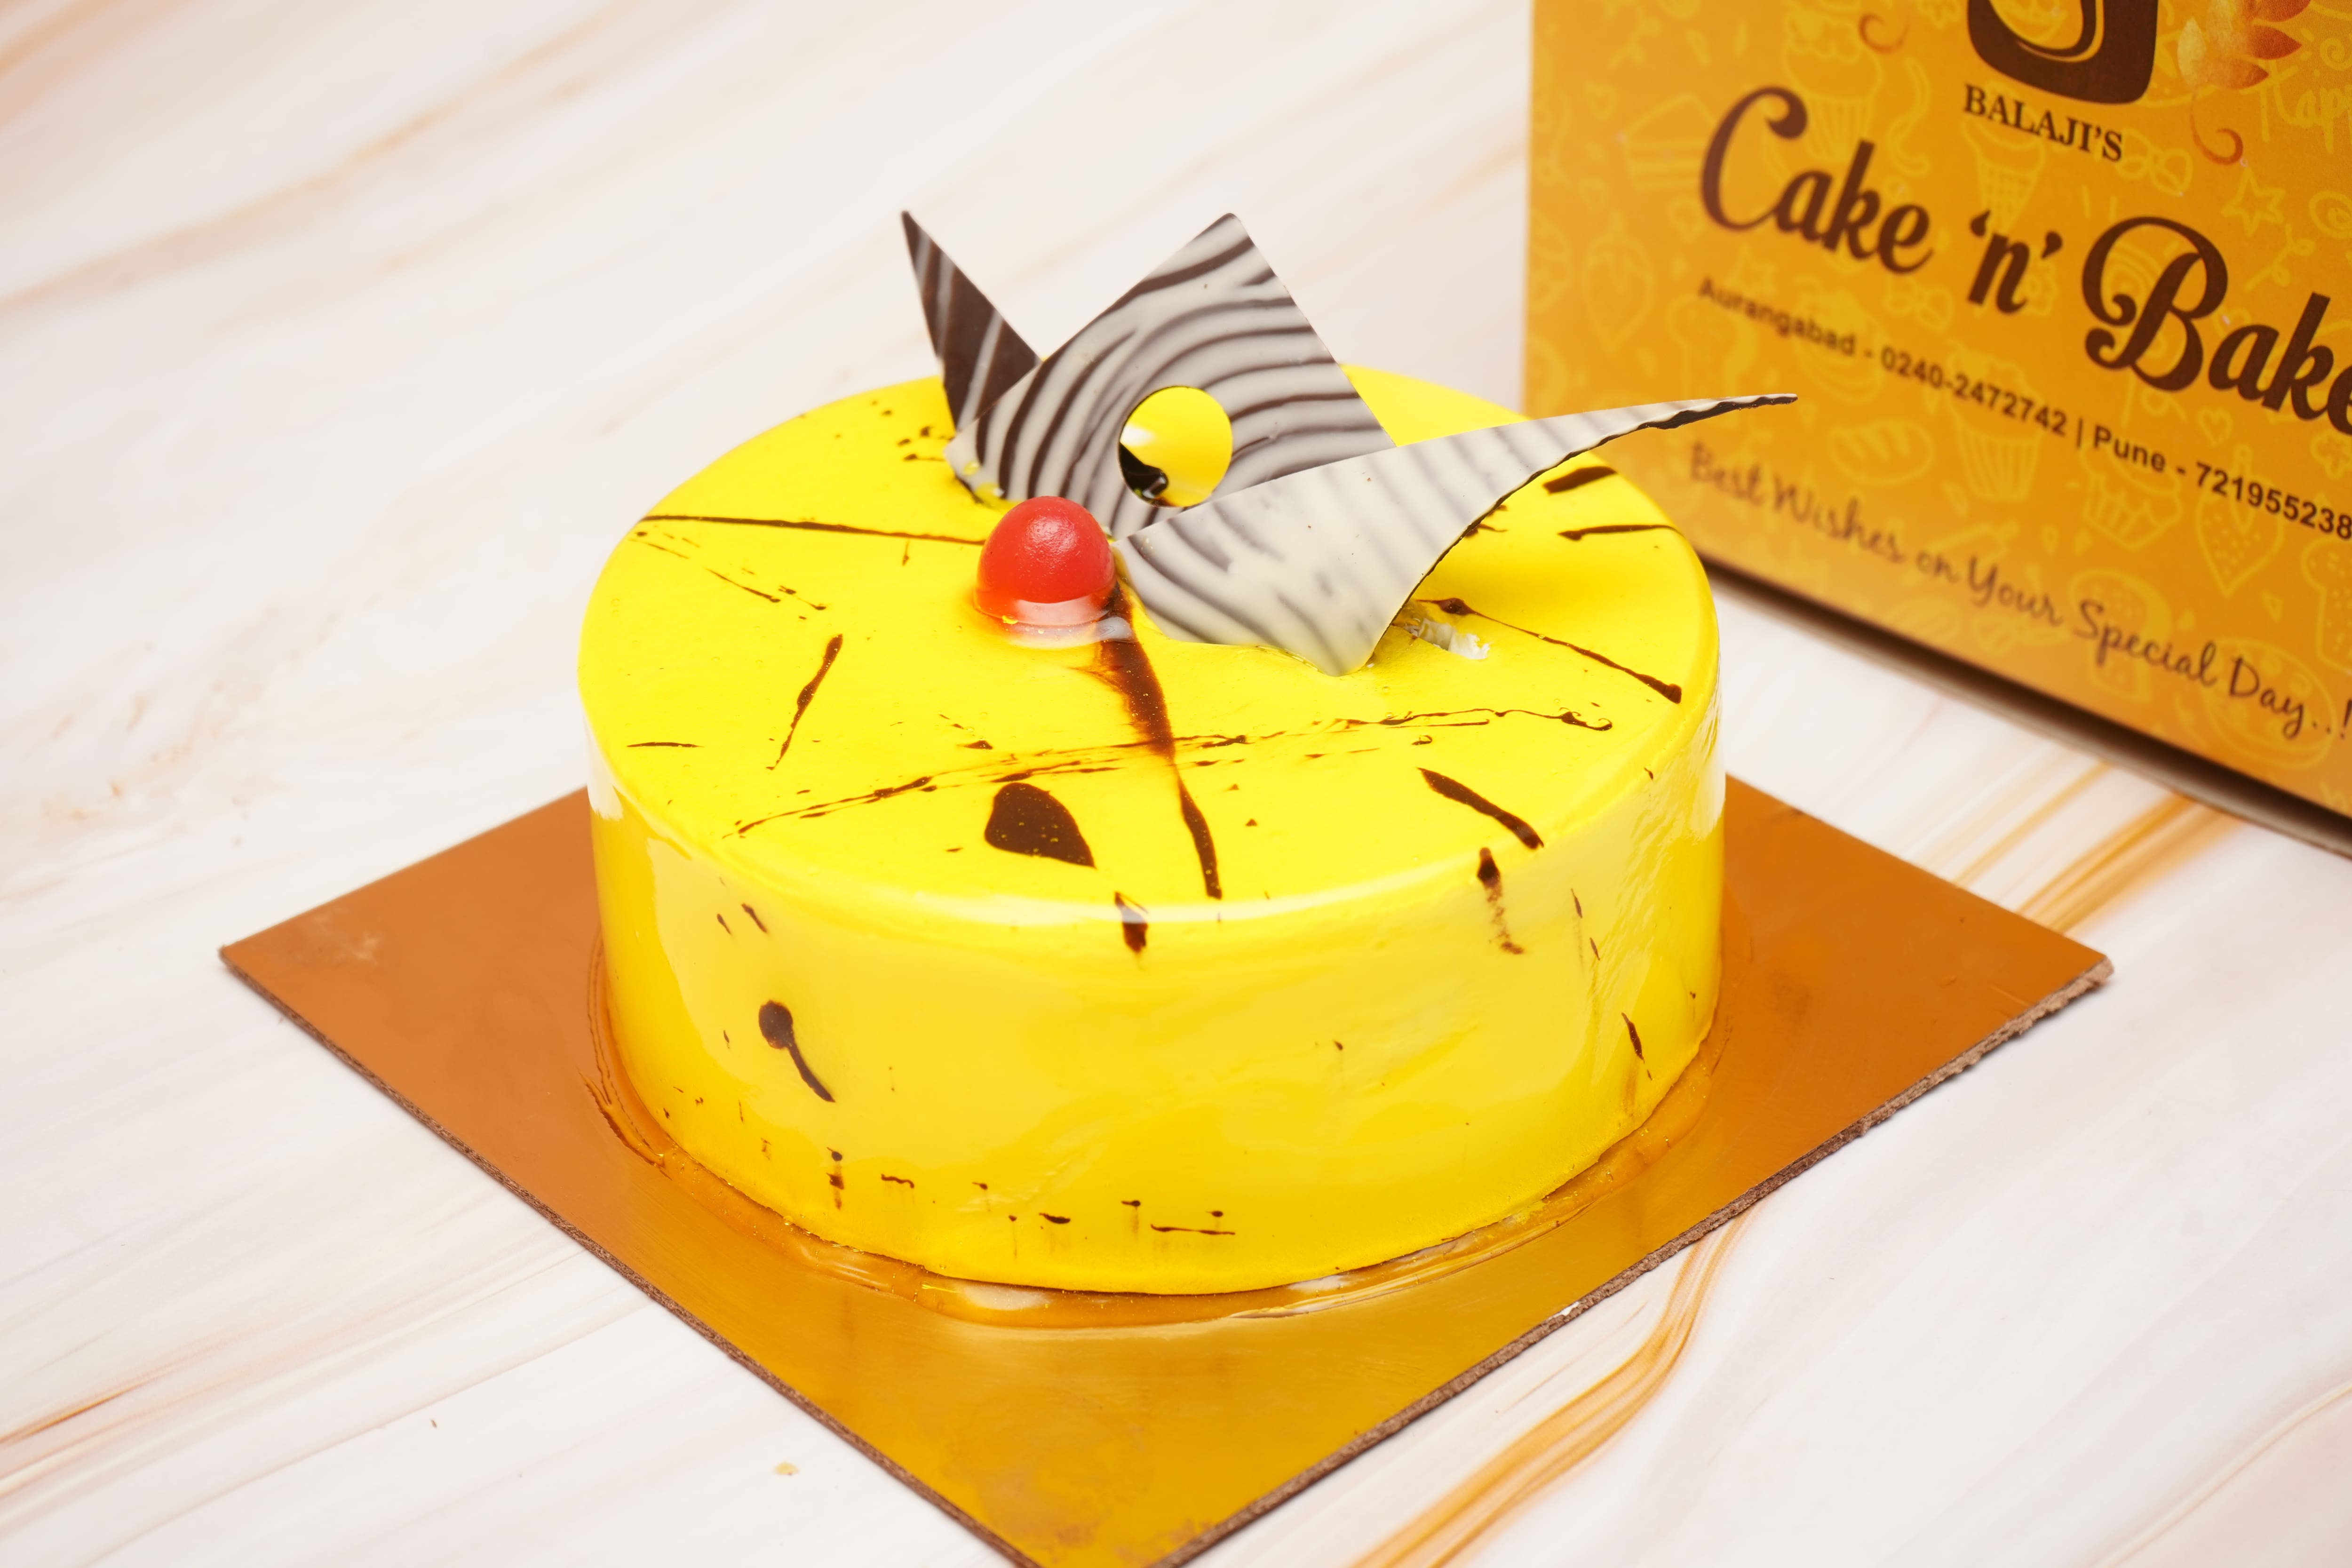 Chocolate Cream Gateau Cake in Pune | Just Cakes